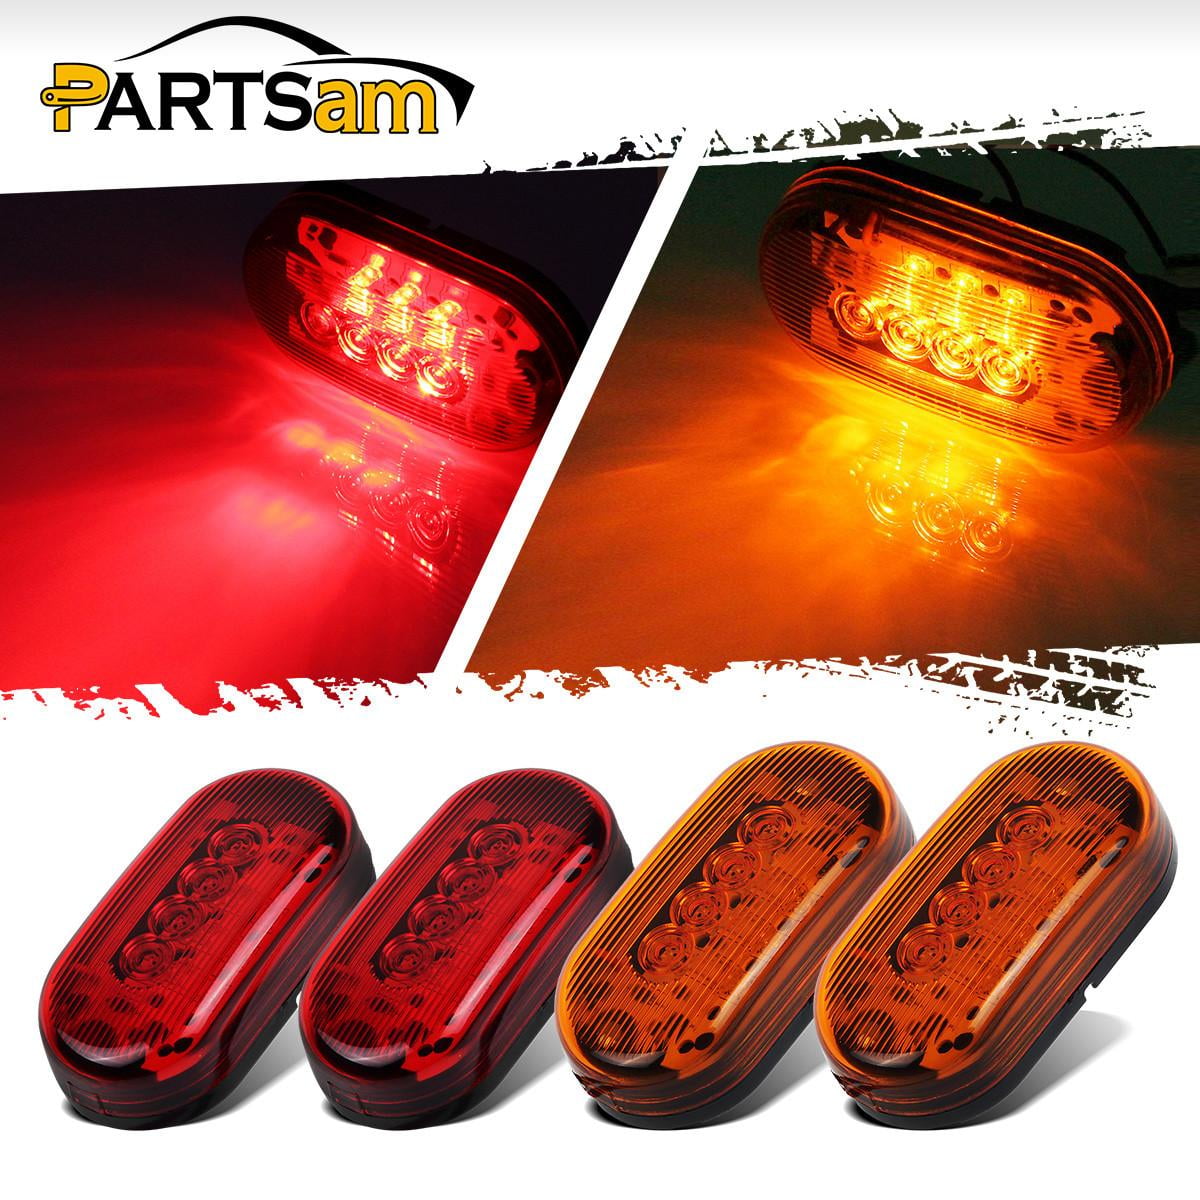 Partsam 4x Waterproof Amber/Red 4LED Side Marker Light 2x 4 LED Clearance Trailer Fender Lights Amber Front Red Back 4 Diodes RH/LH 